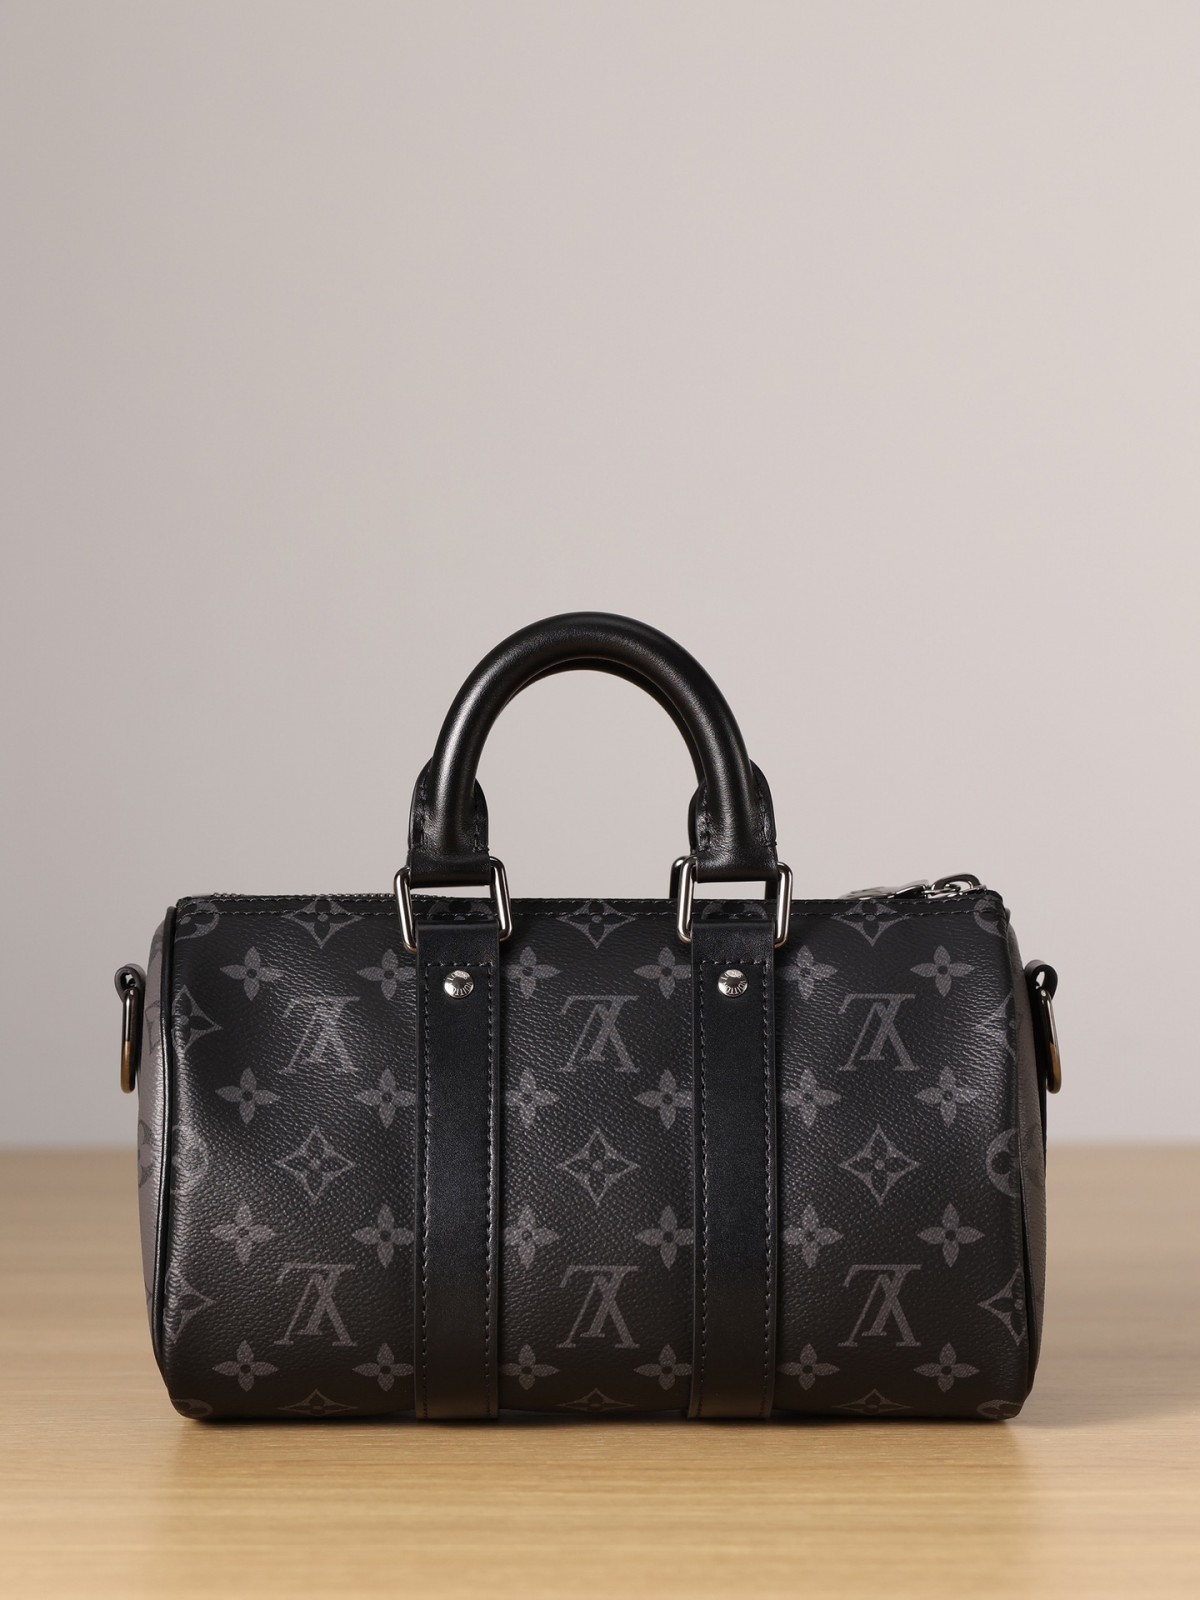 How good quality is a Shebag replica Louis Vuitton KEEPALL BANDOULIÈRE 25 bag?(2023 Week 49)-ఉత్తమ నాణ్యత నకిలీ లూయిస్ విట్టన్ బ్యాగ్ ఆన్‌లైన్ స్టోర్, రెప్లికా డిజైనర్ బ్యాగ్ రు